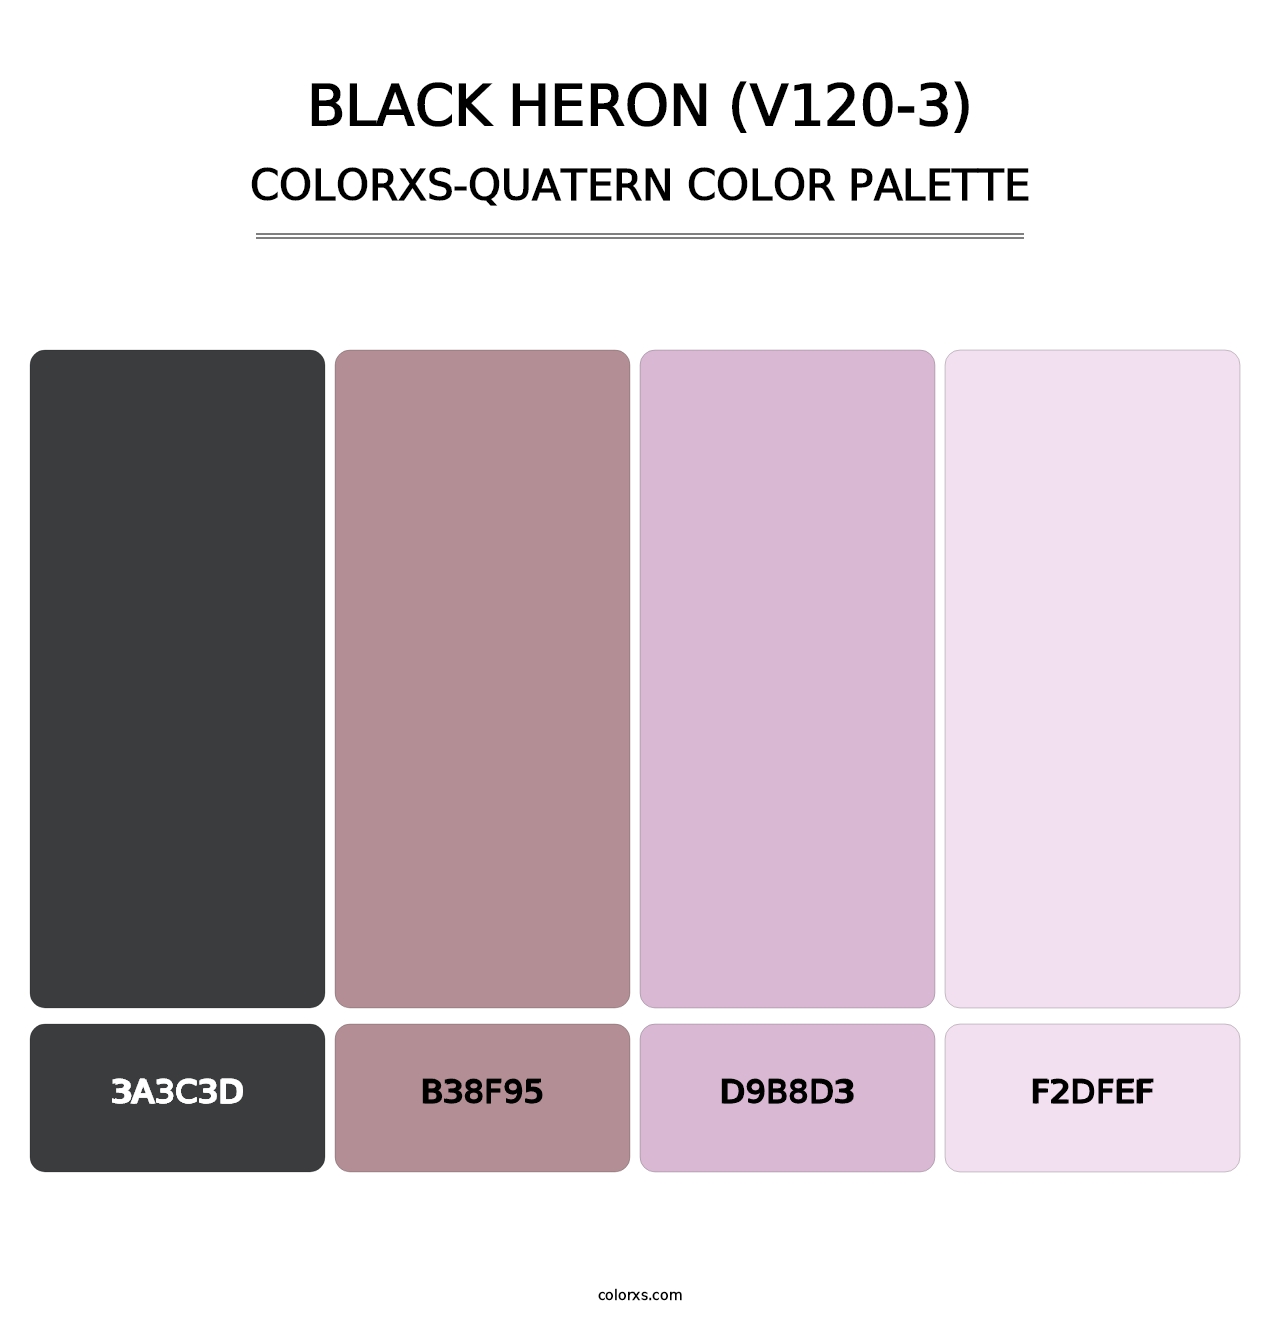 Black Heron (V120-3) - Colorxs Quatern Palette